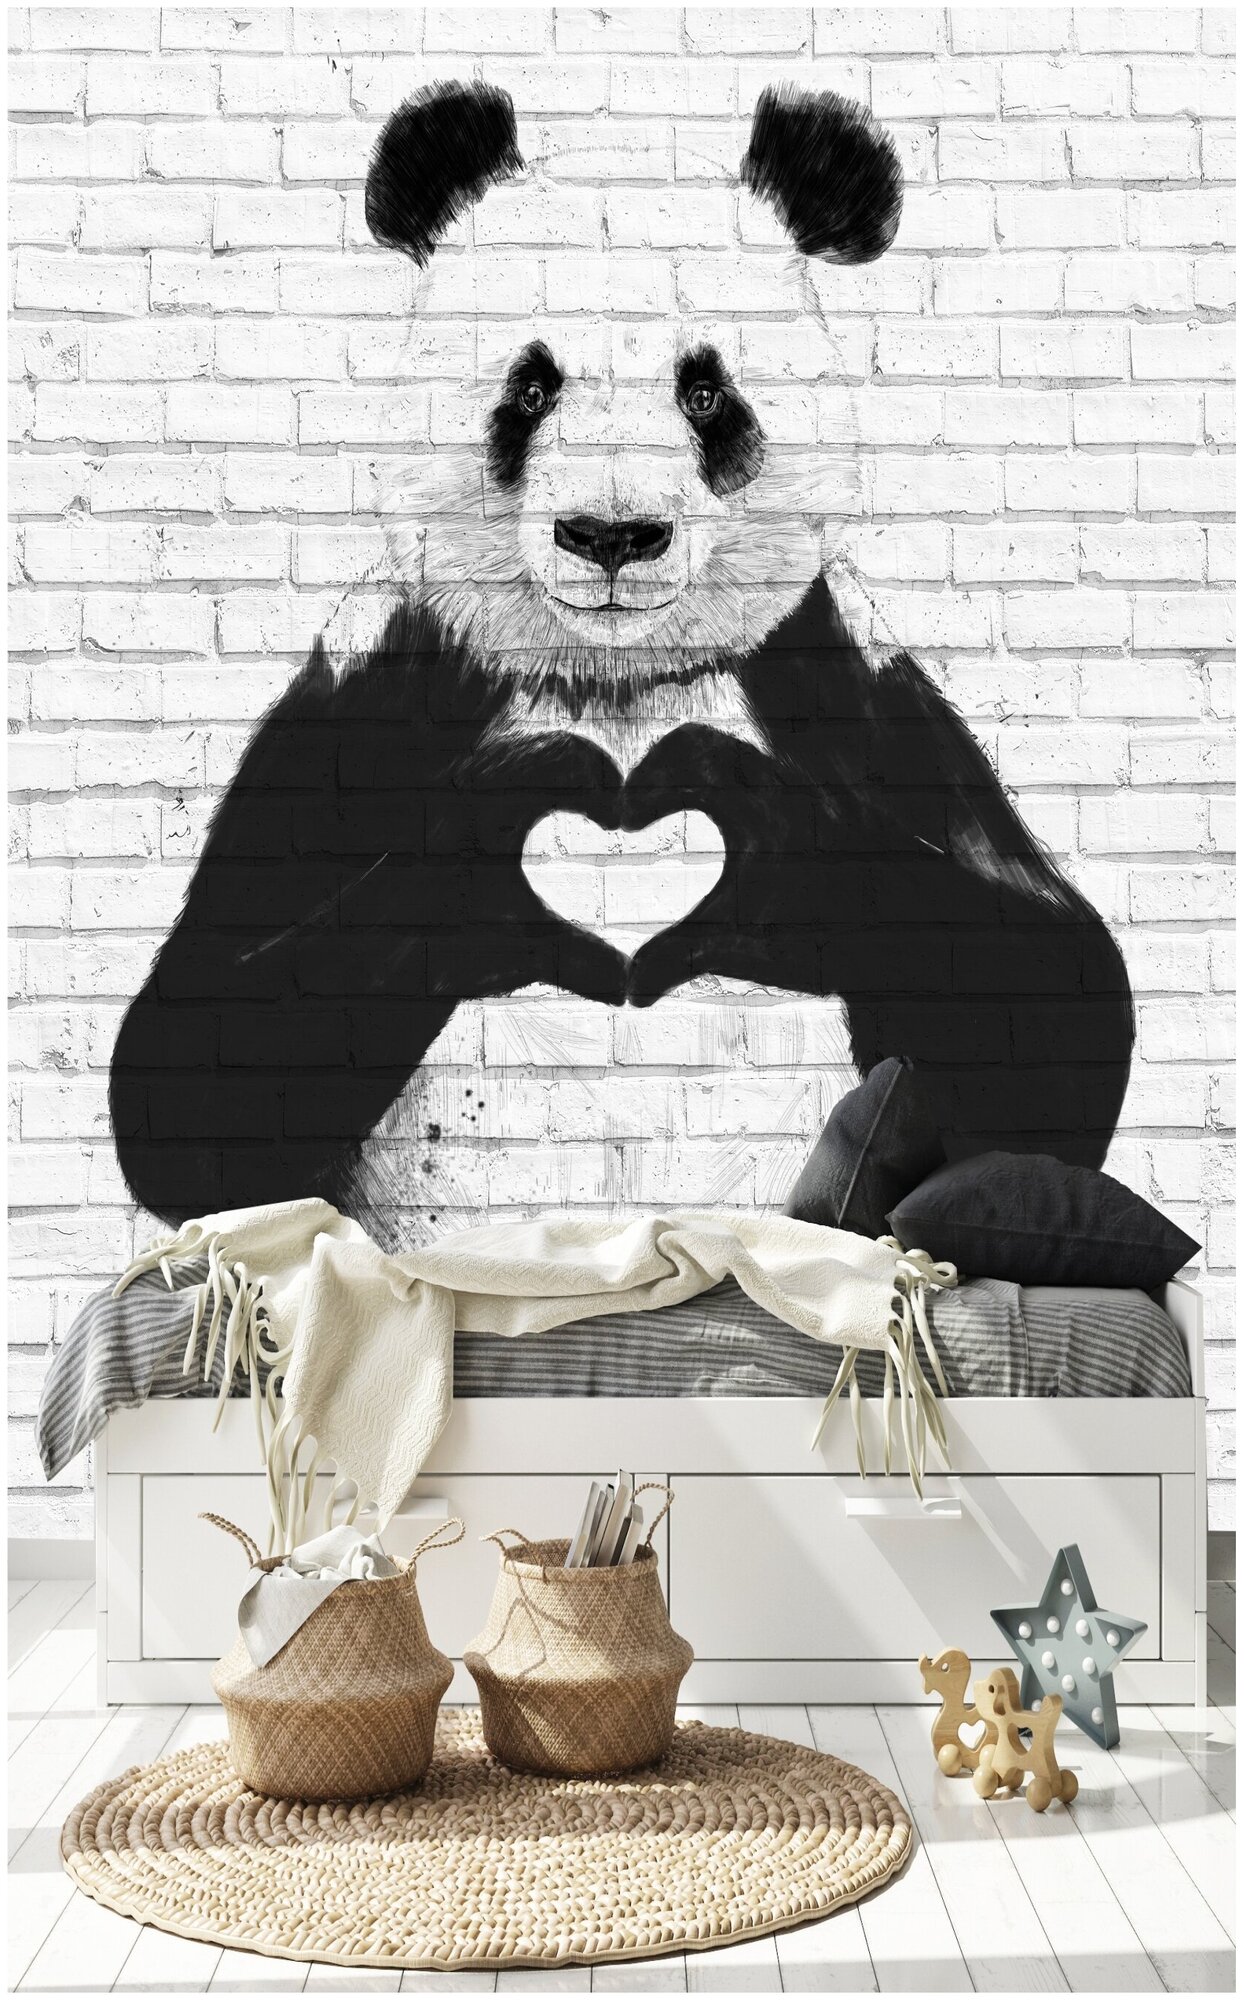 Характеристики модели Фотообои "Панда на фоне кирпичной стены " 200х260 см. — Обои — Яндекс Маркет